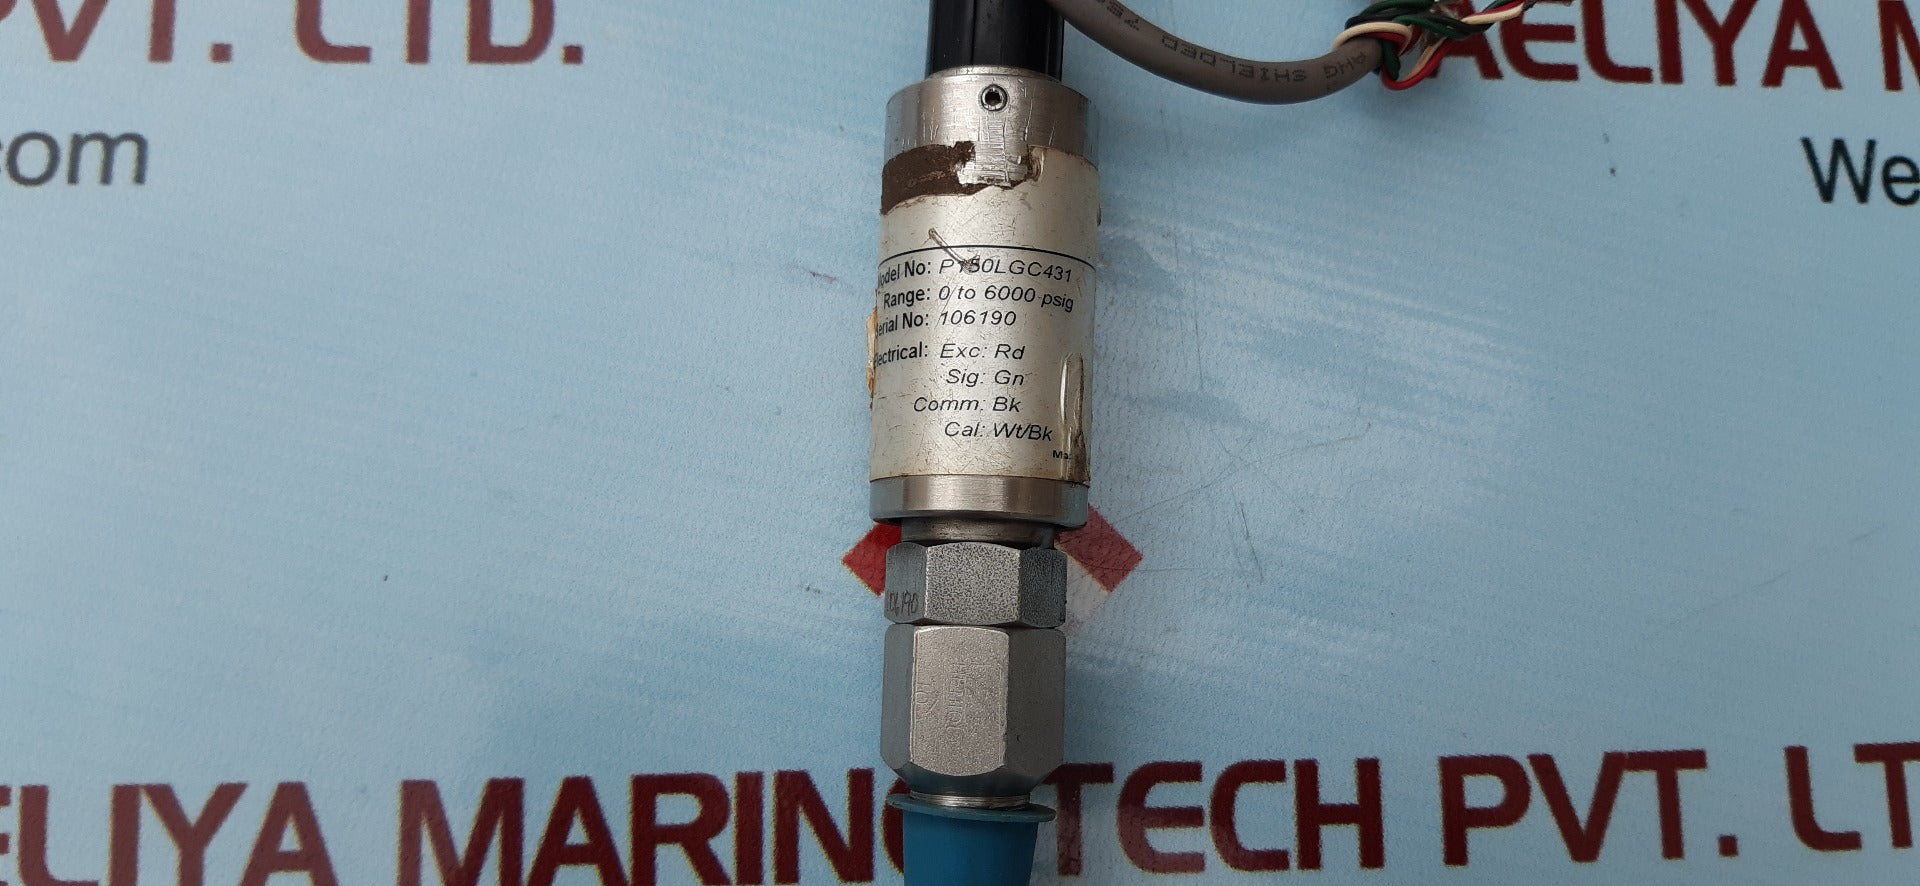 P150lgc431 pressure transducer 0 to 6000 psig